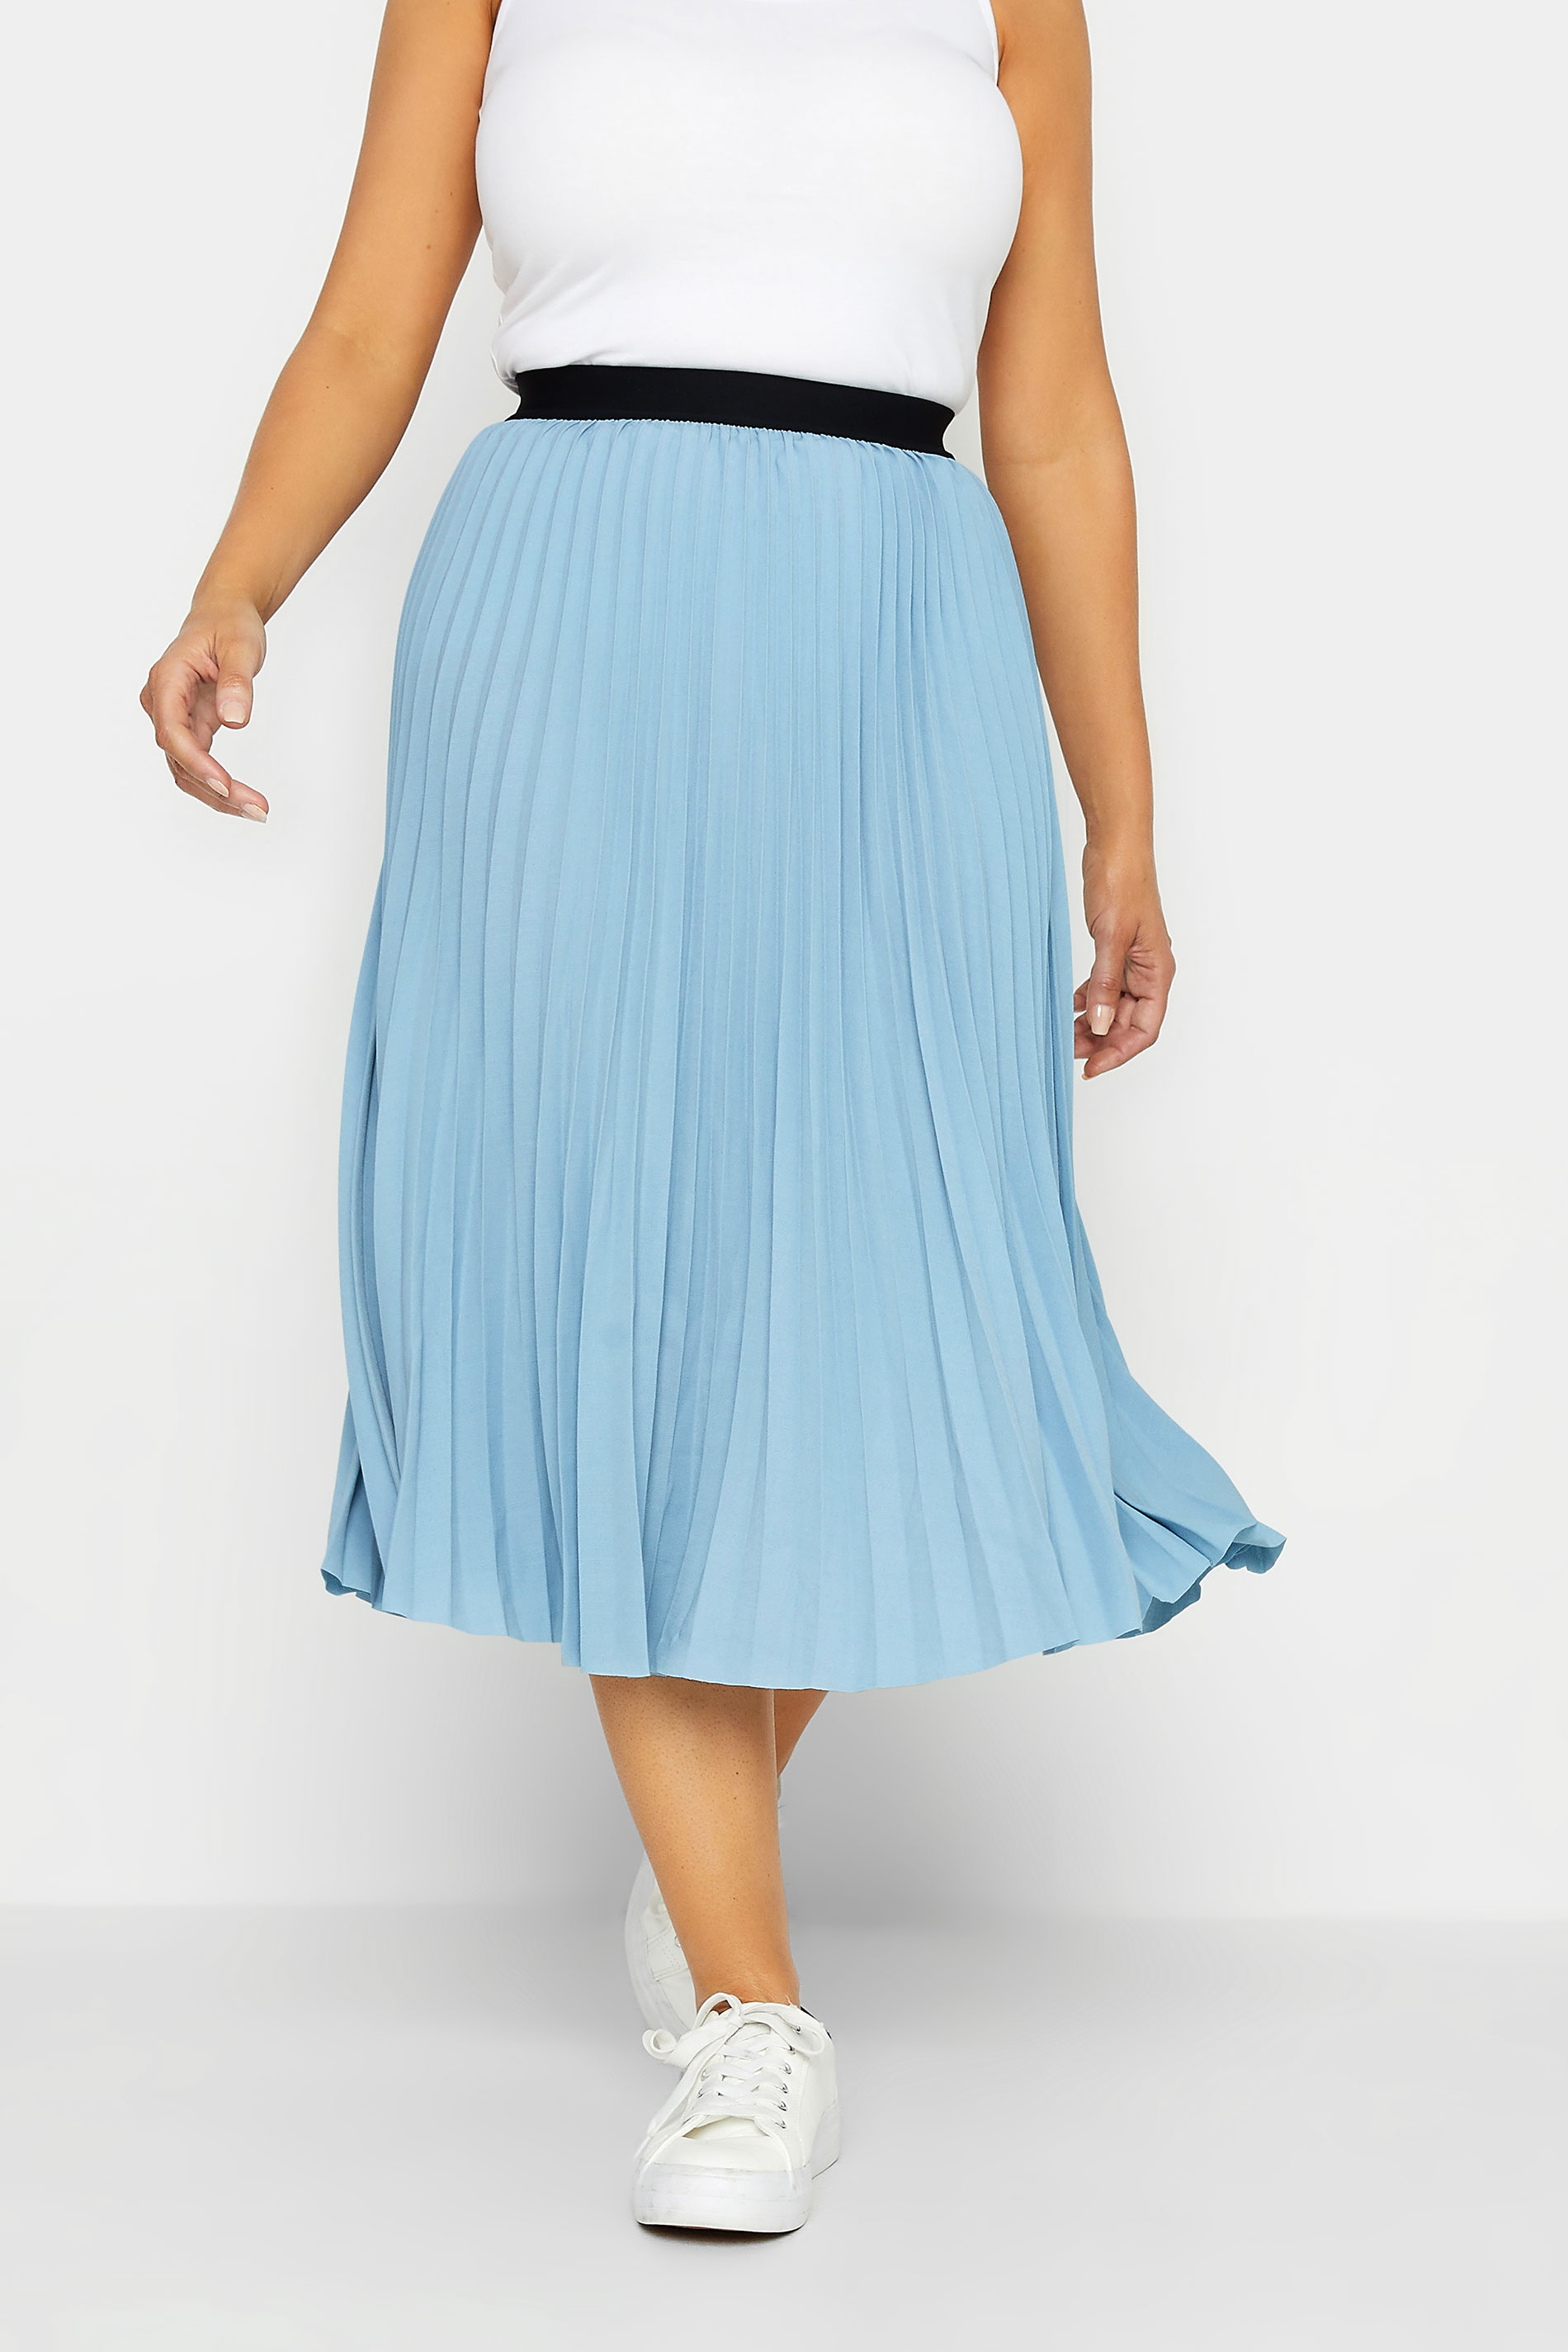 M&Co Blue Pleated Midi Skirt | M&Co 1